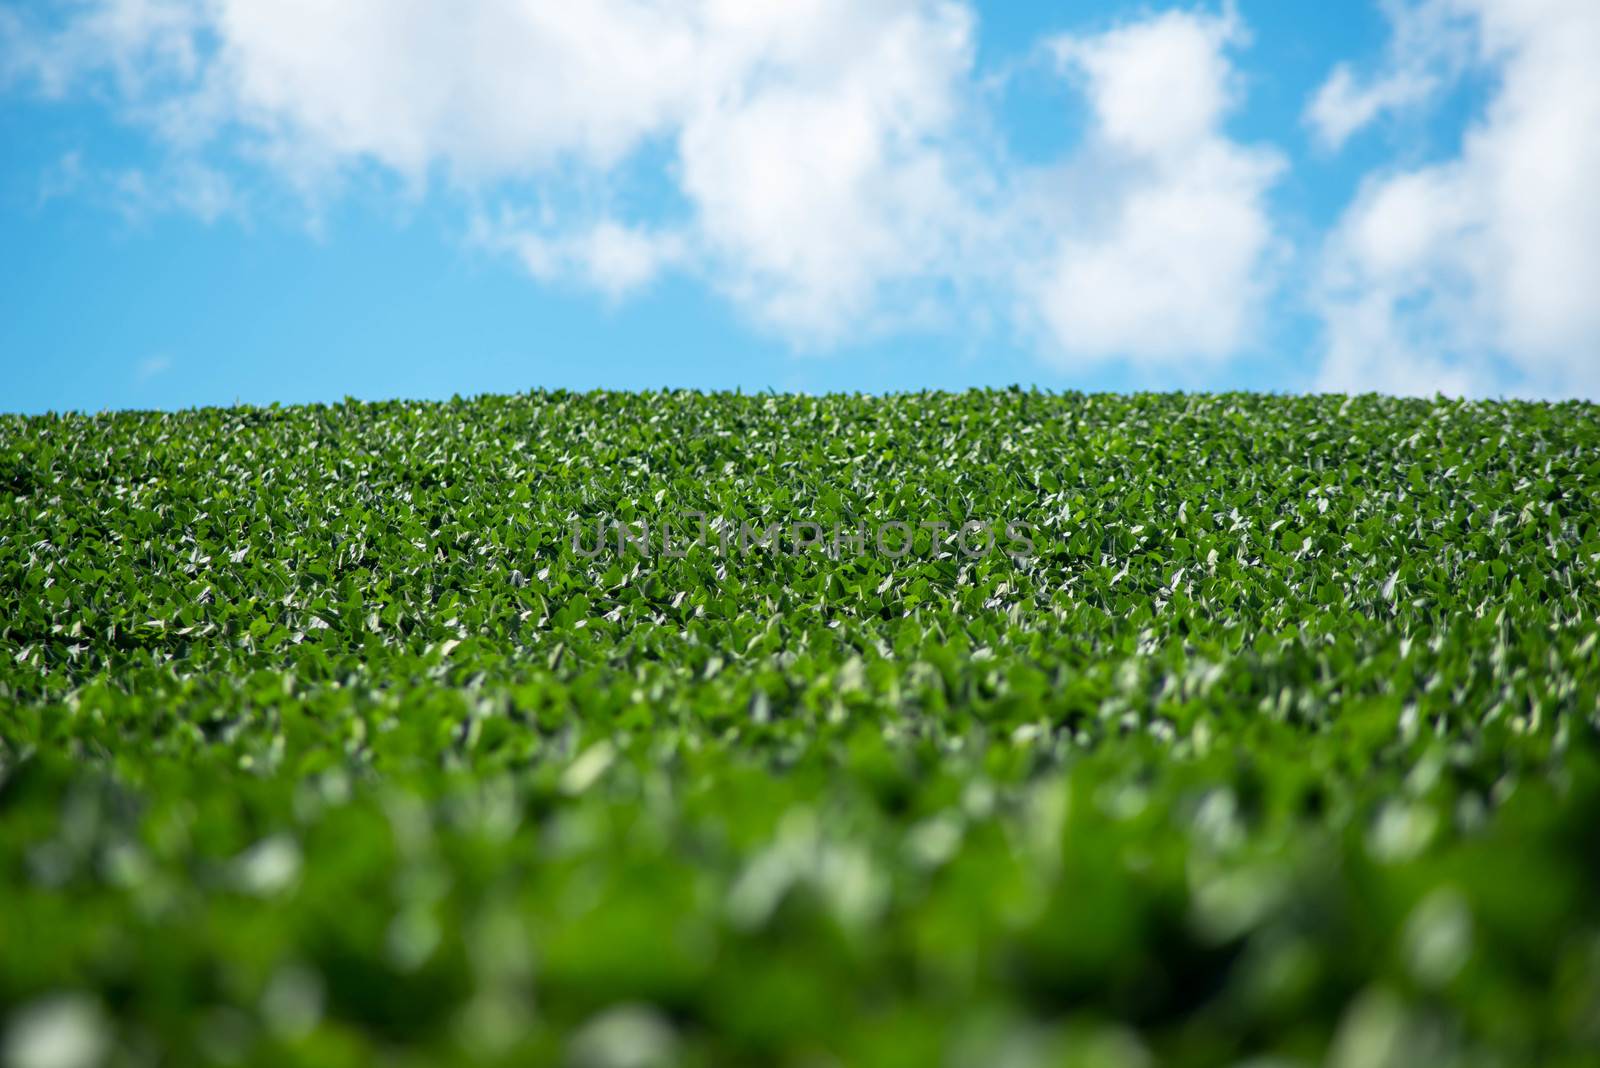 Abstract soybean field on a sunny hillside under blue sky by marysalen